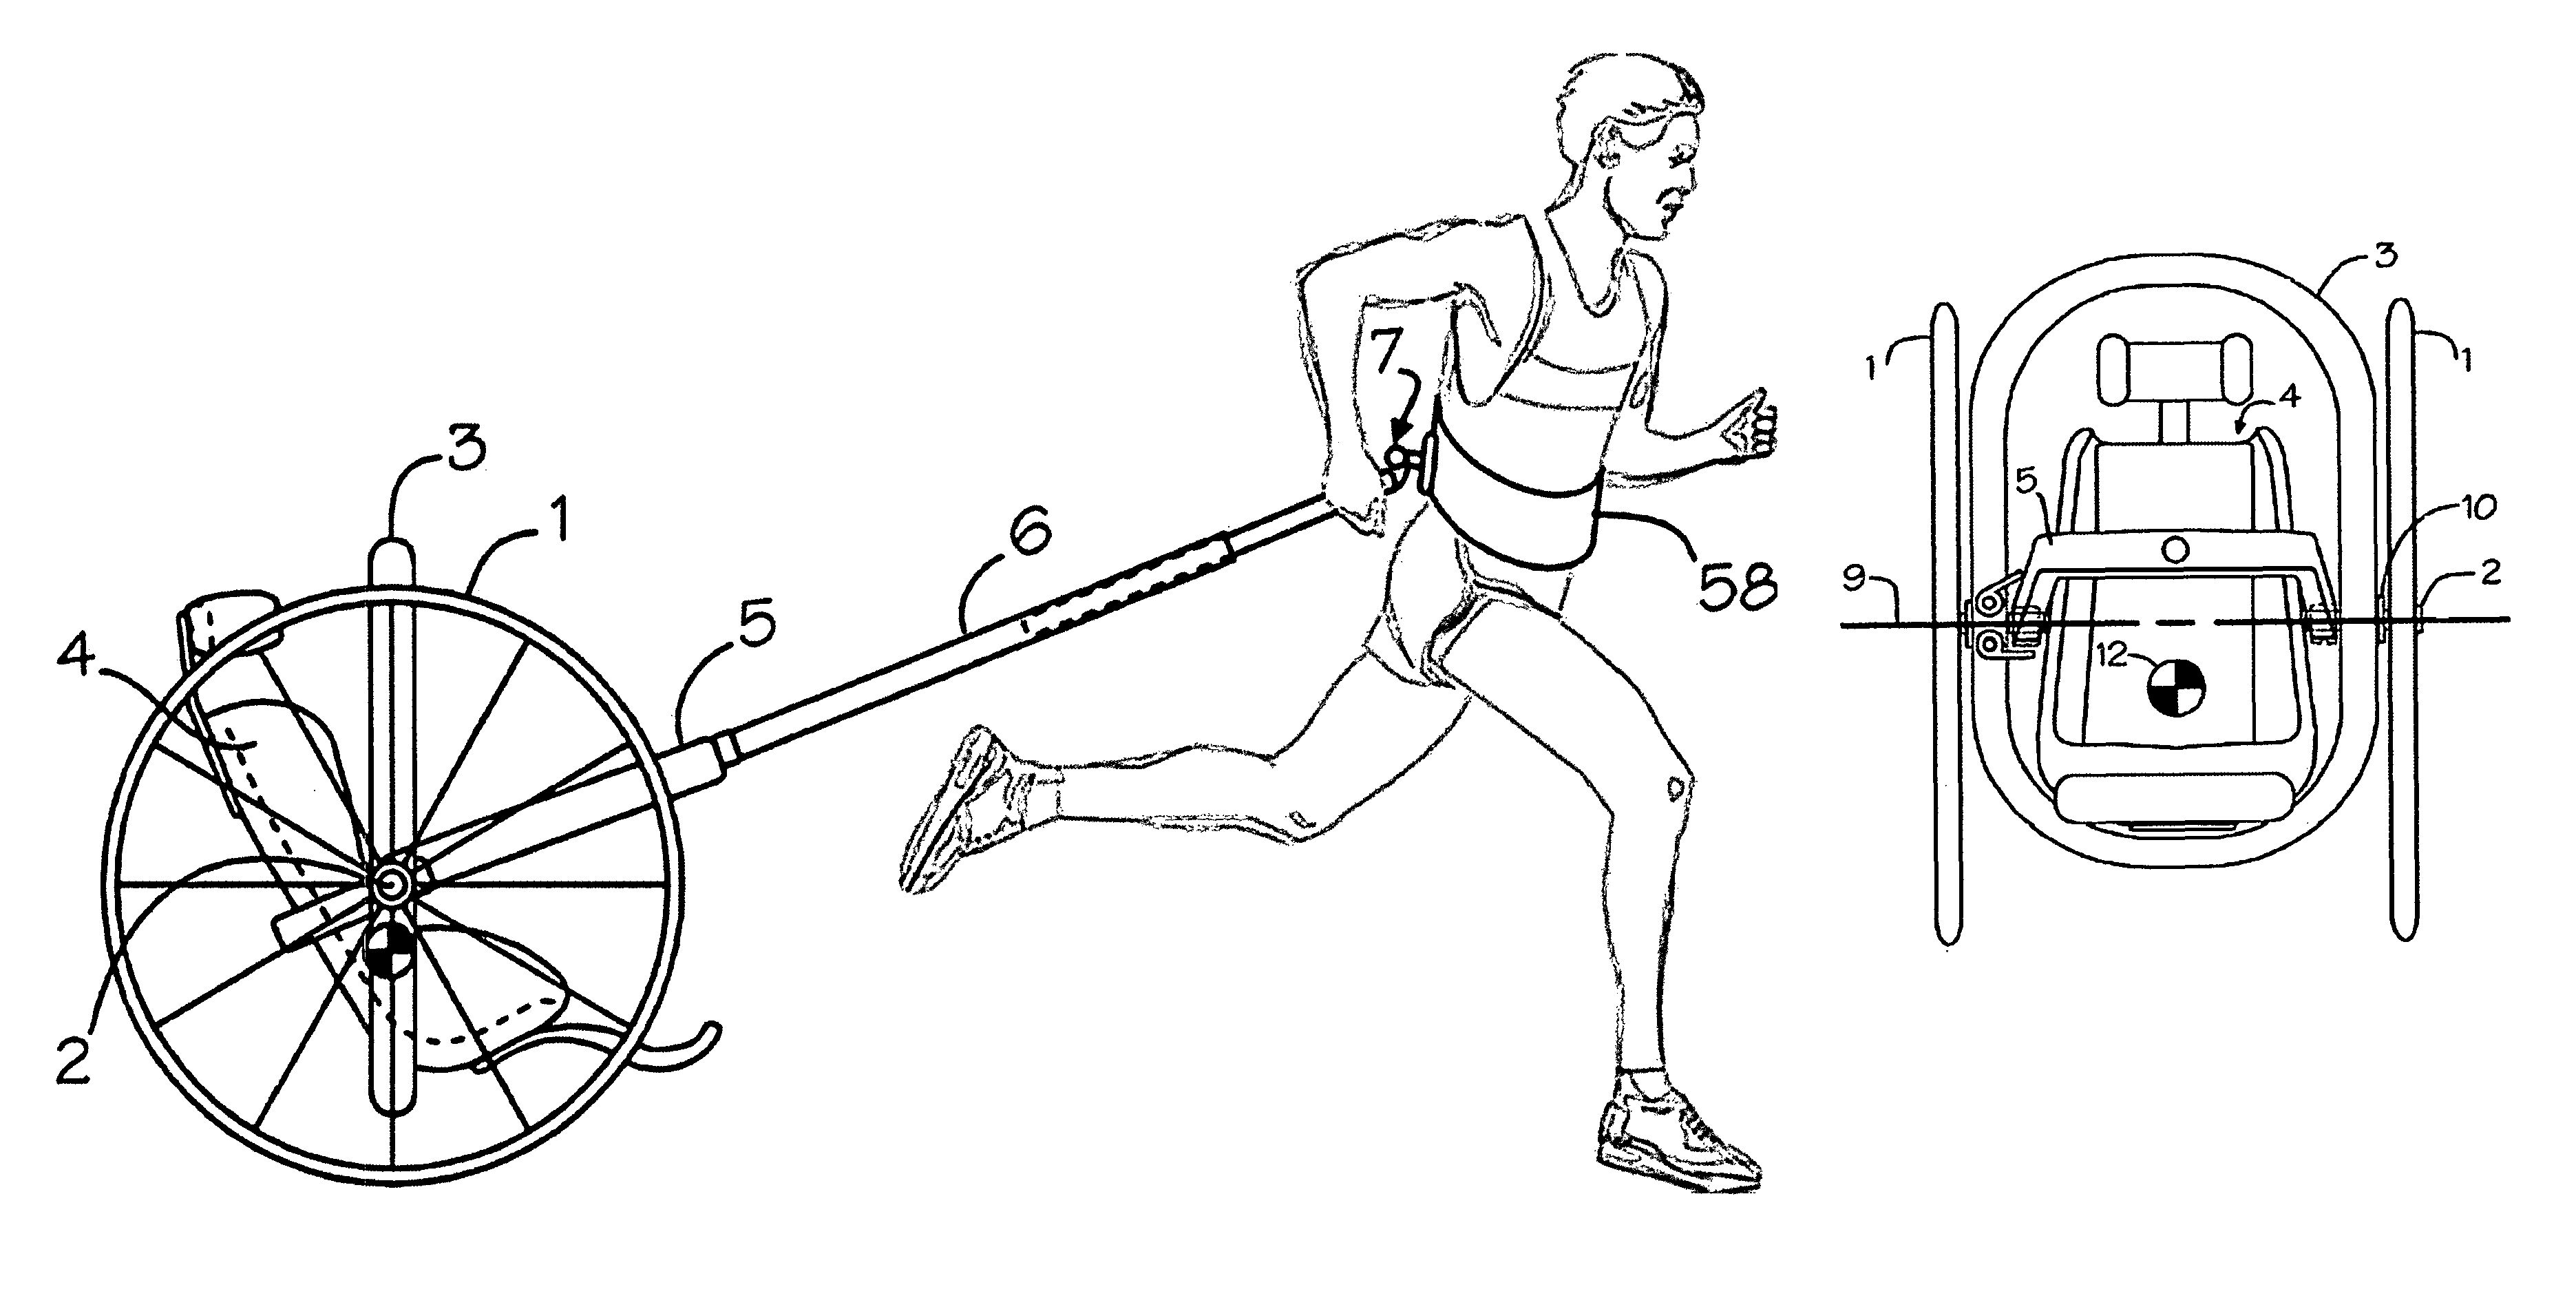 Tow type running stroller